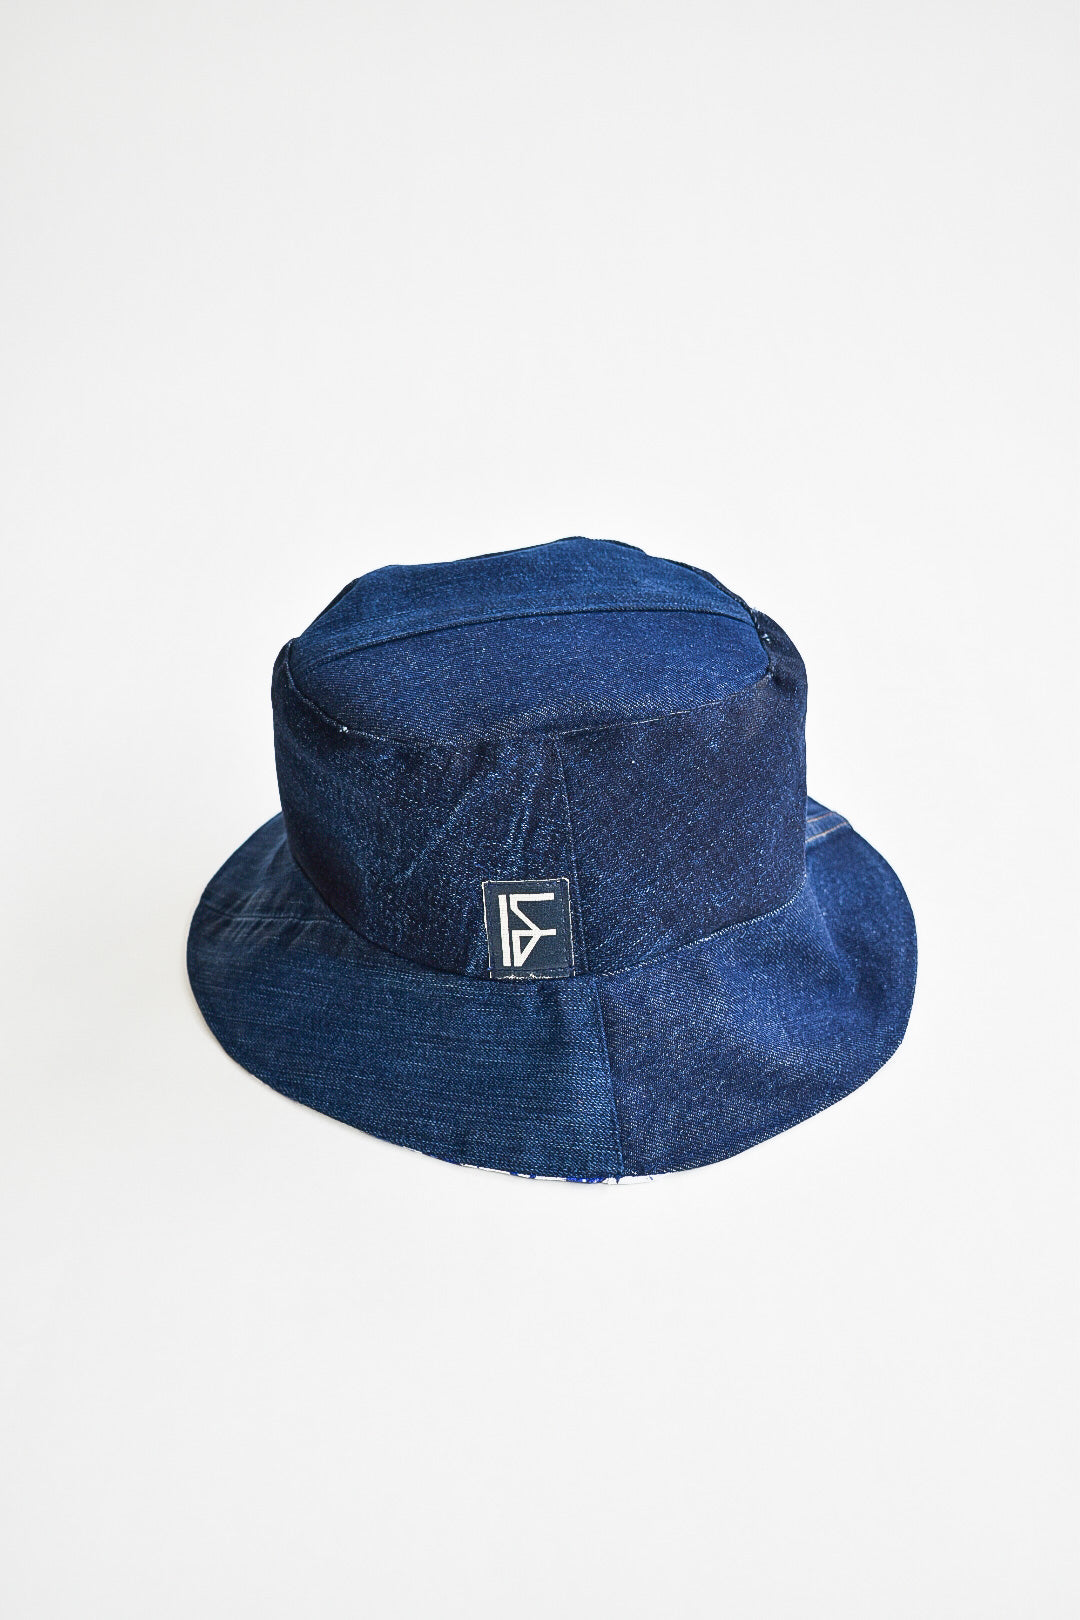 ALS DENIM | Blauwe bloesem emmer hoed